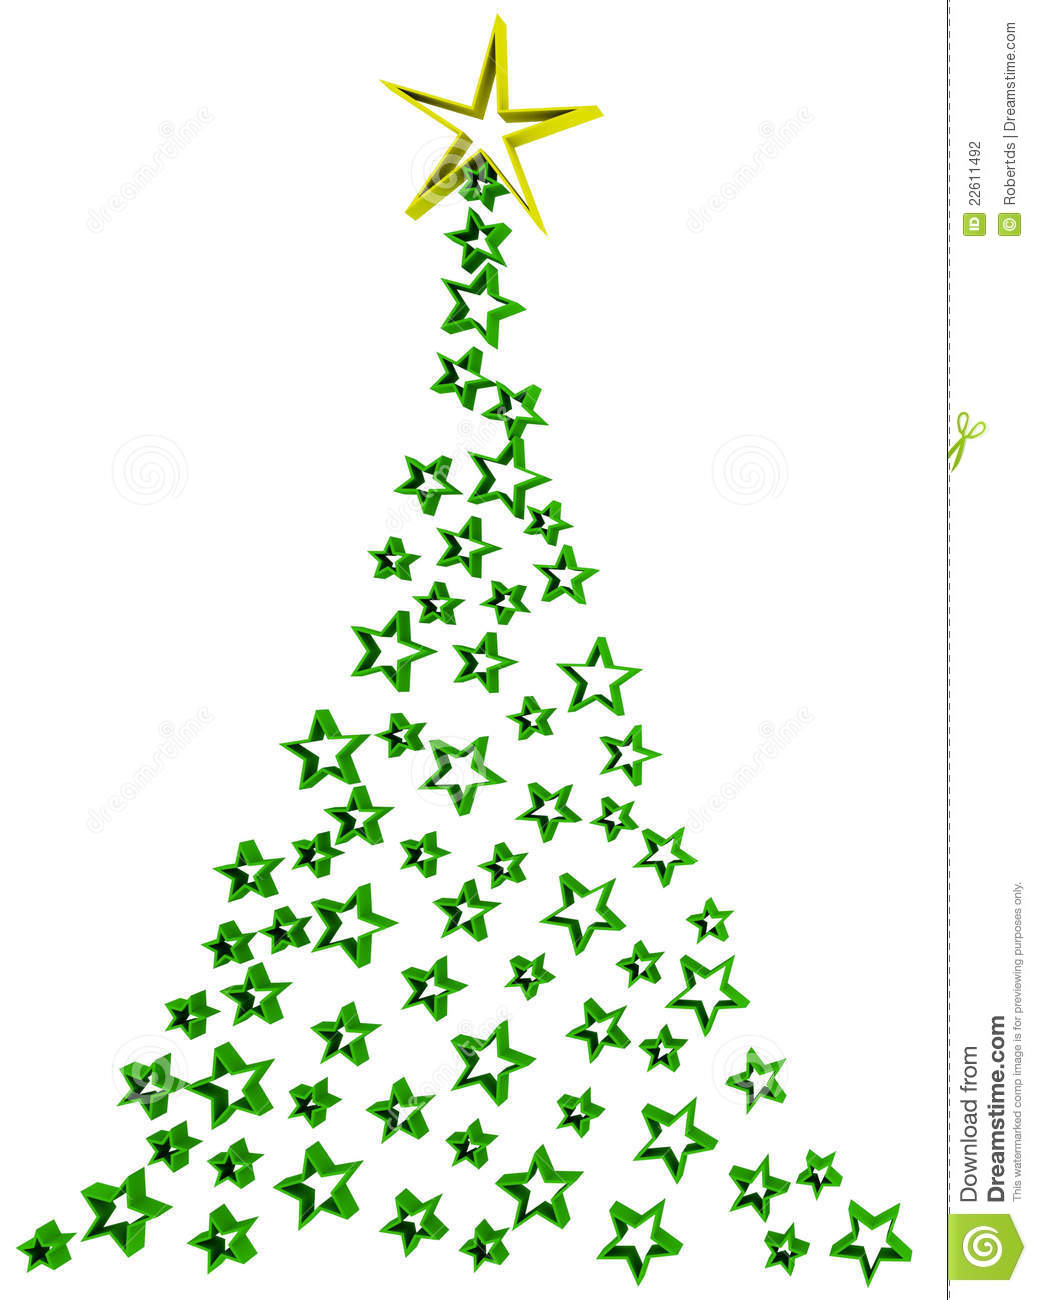 Abstract Christmas Tree Stock Photography   Image  22611492